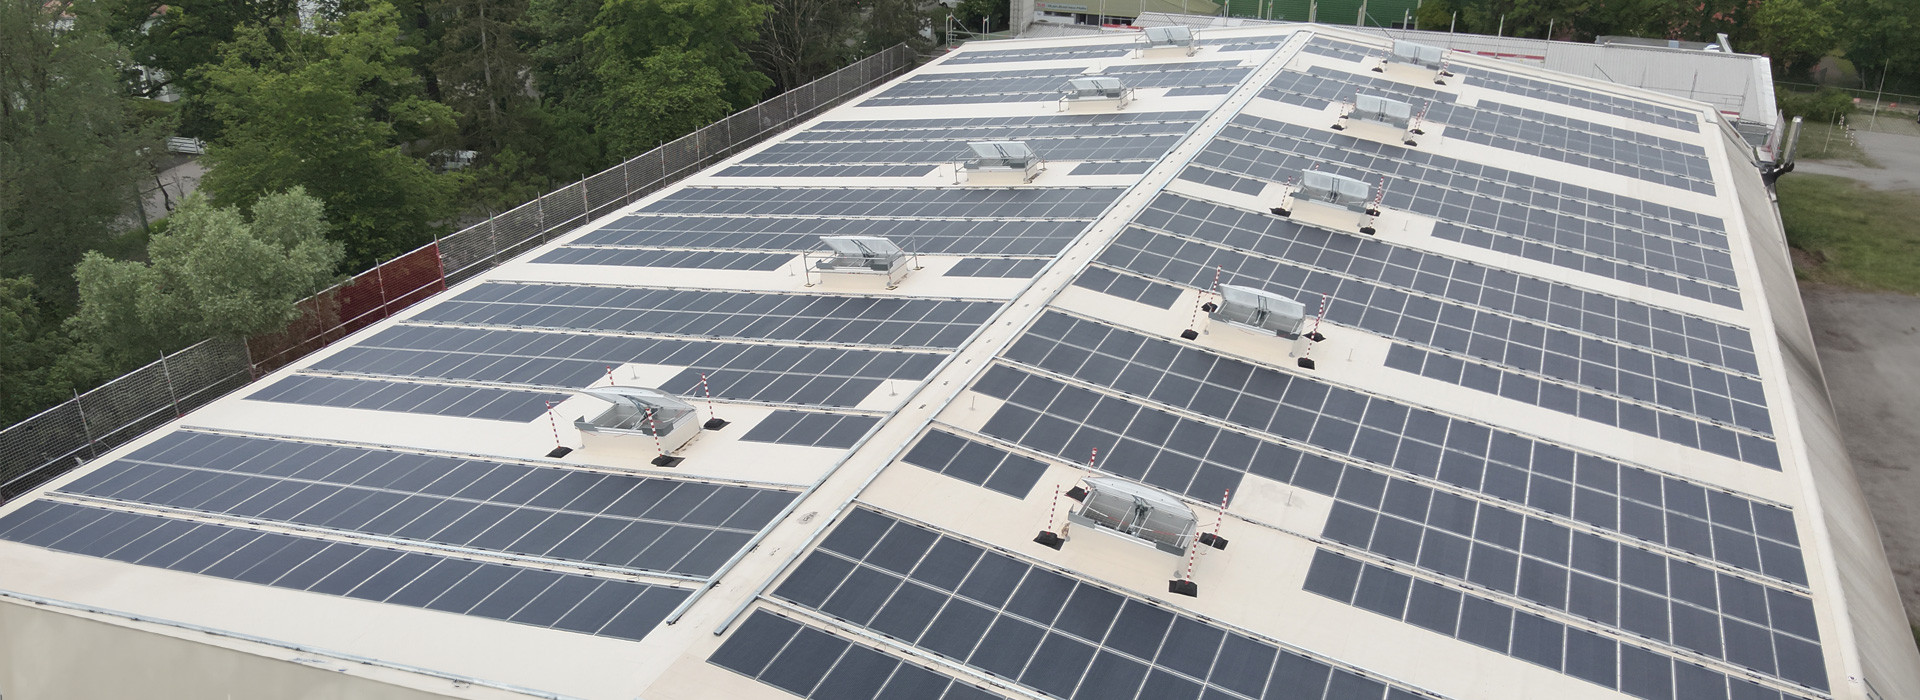 Solar panels for foil and bitumen flat roofs